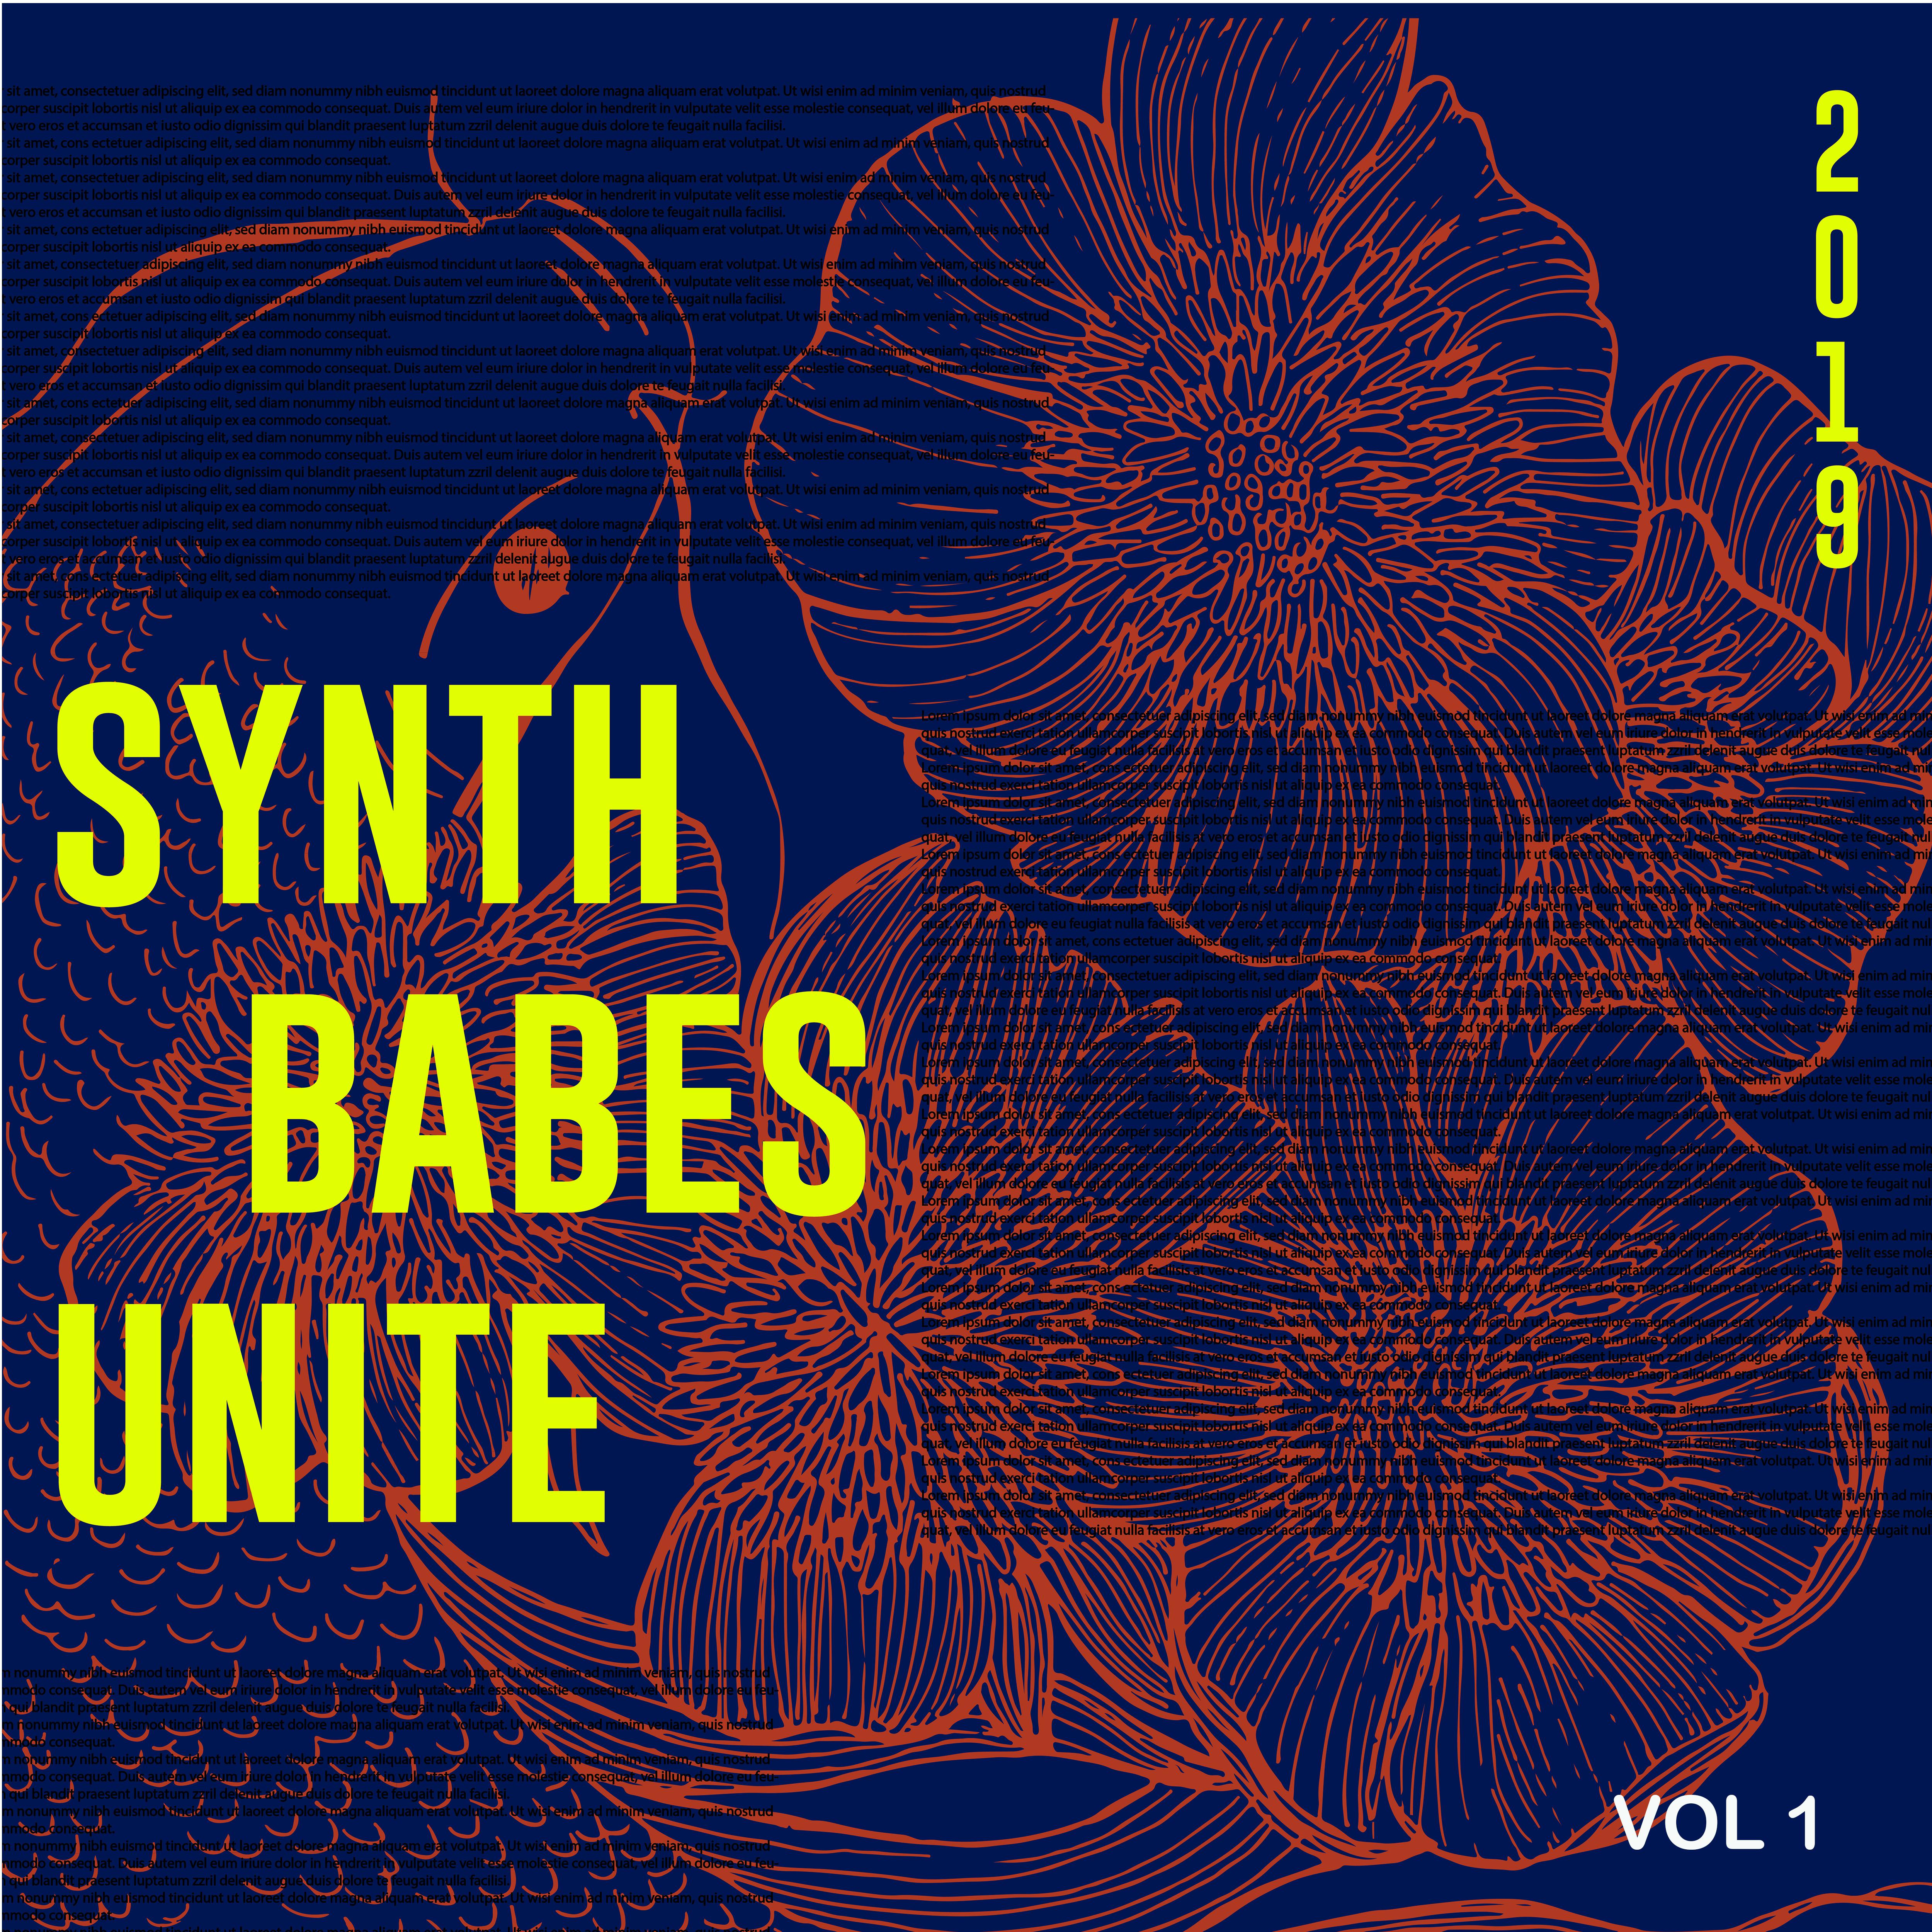 Synth Babes Unite 2019, Vol. 1